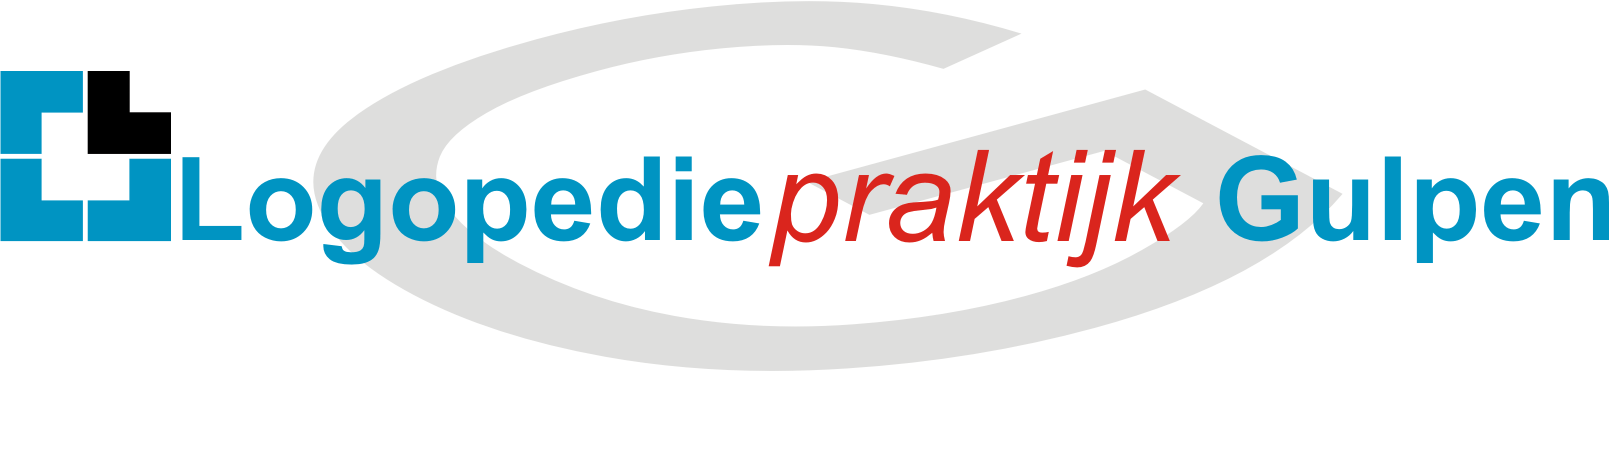 Logopediegulpen.nl